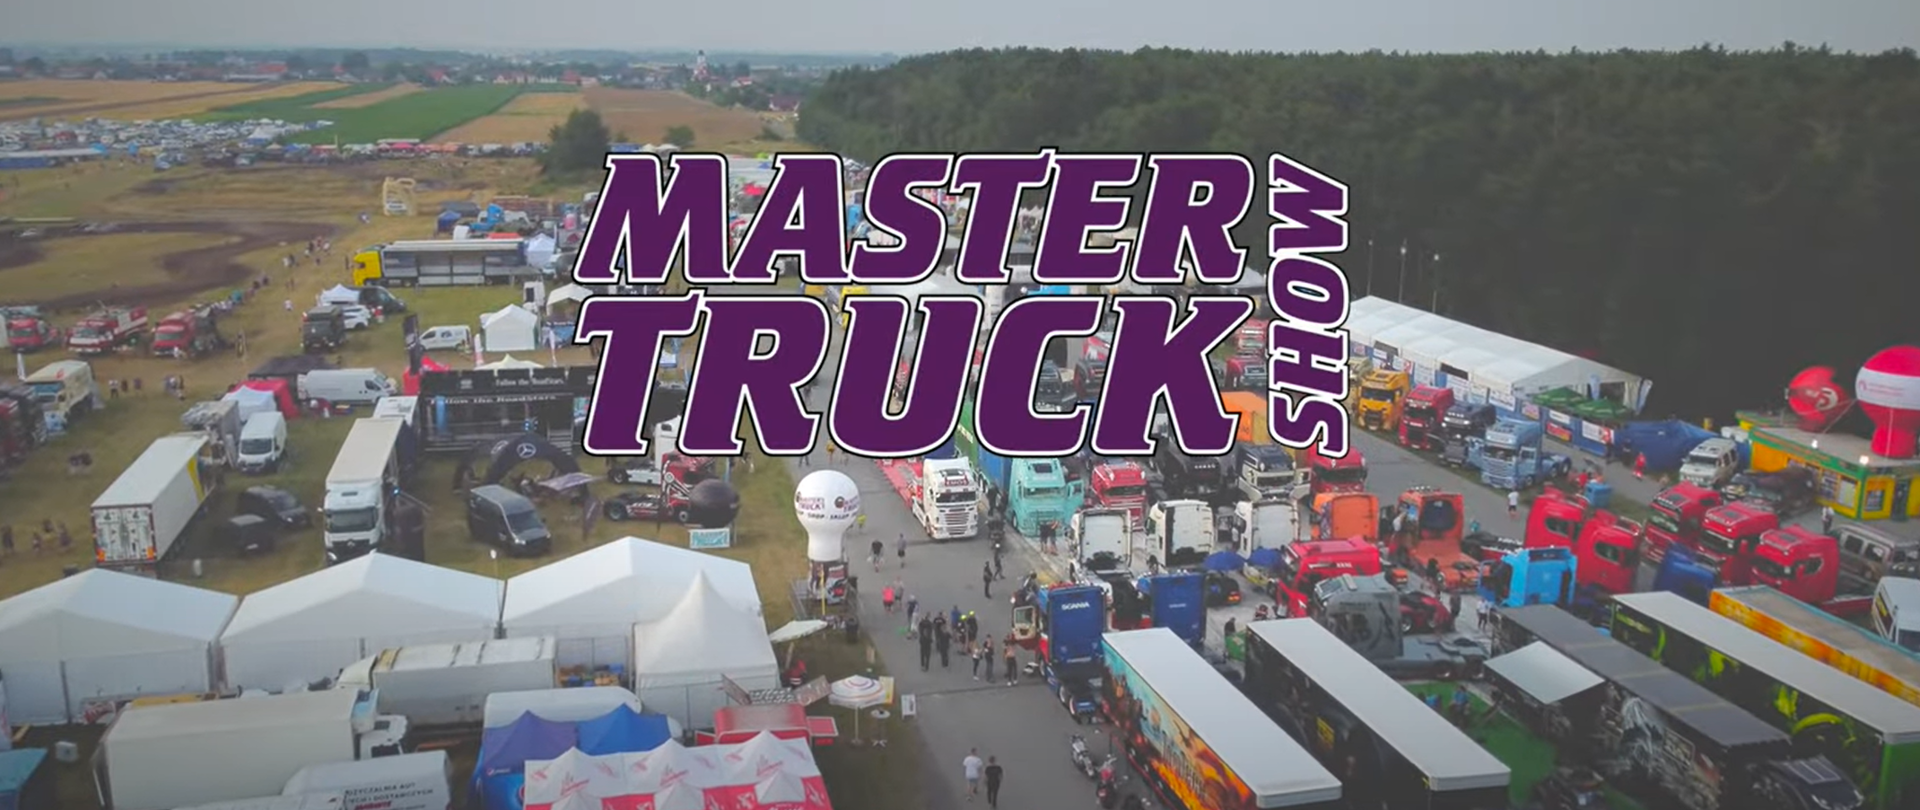 Master Truck Show 2021